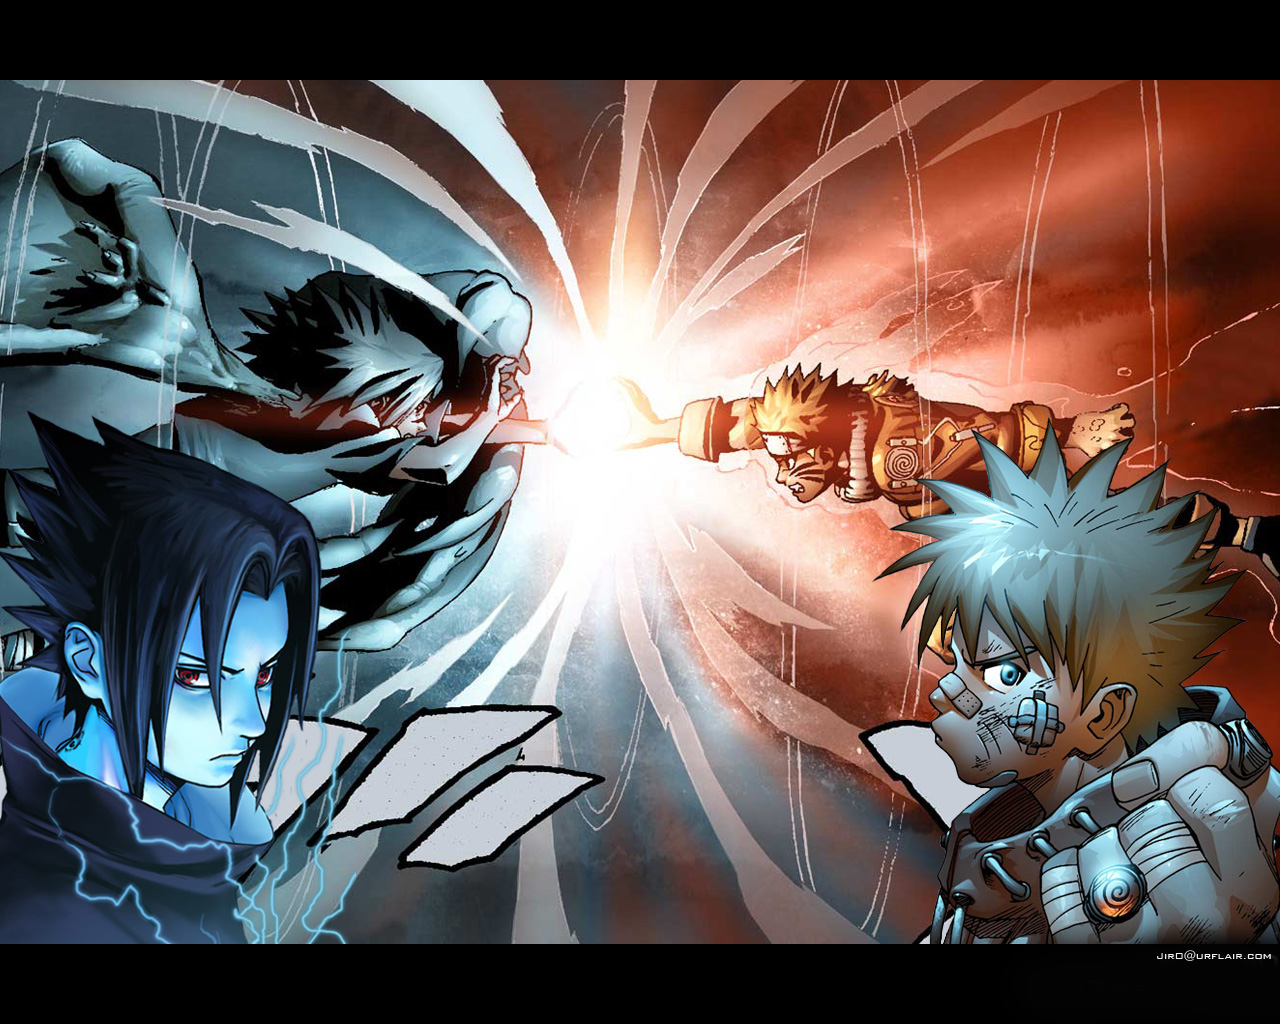 Gambar Foto Naruto Vs Sasuke Berubah Keren Gambar Kata Kata